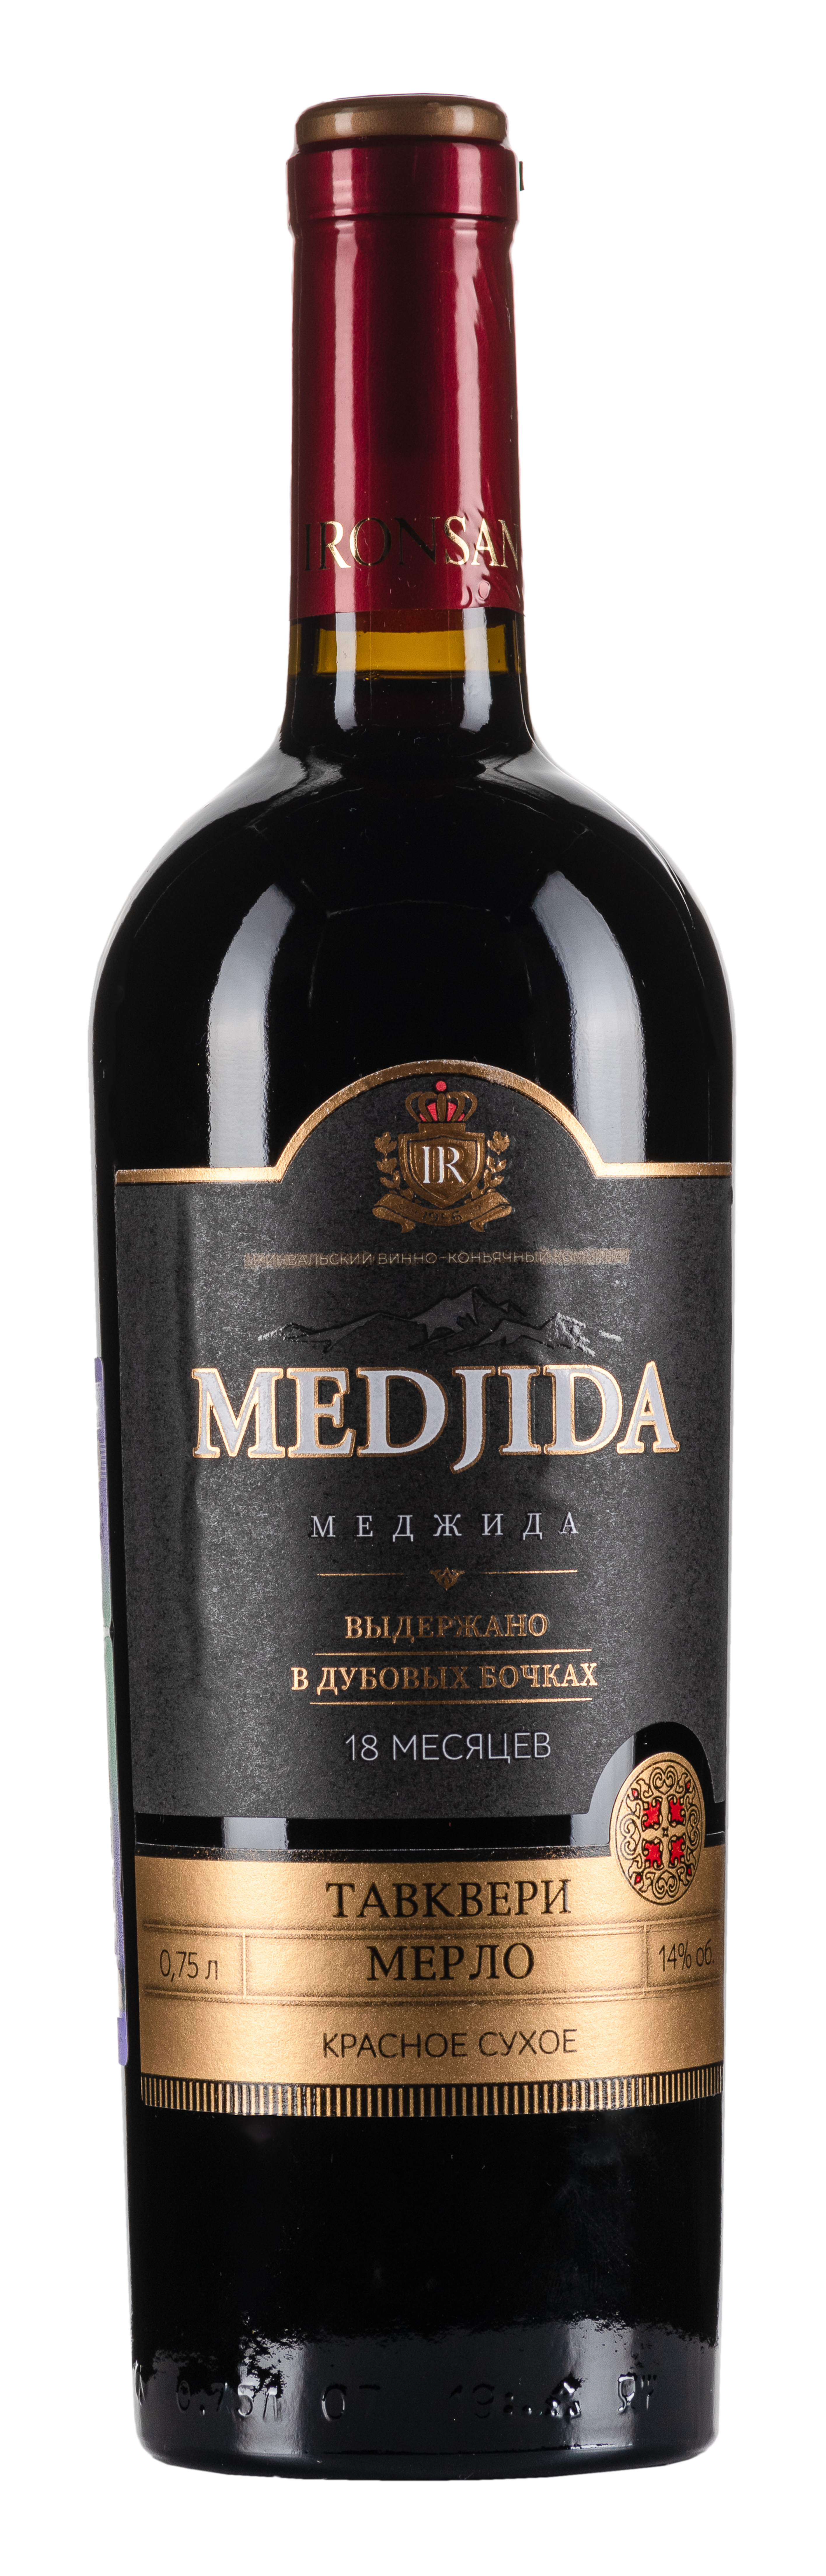 Wine Tavkveri-Merlot (Medjida)